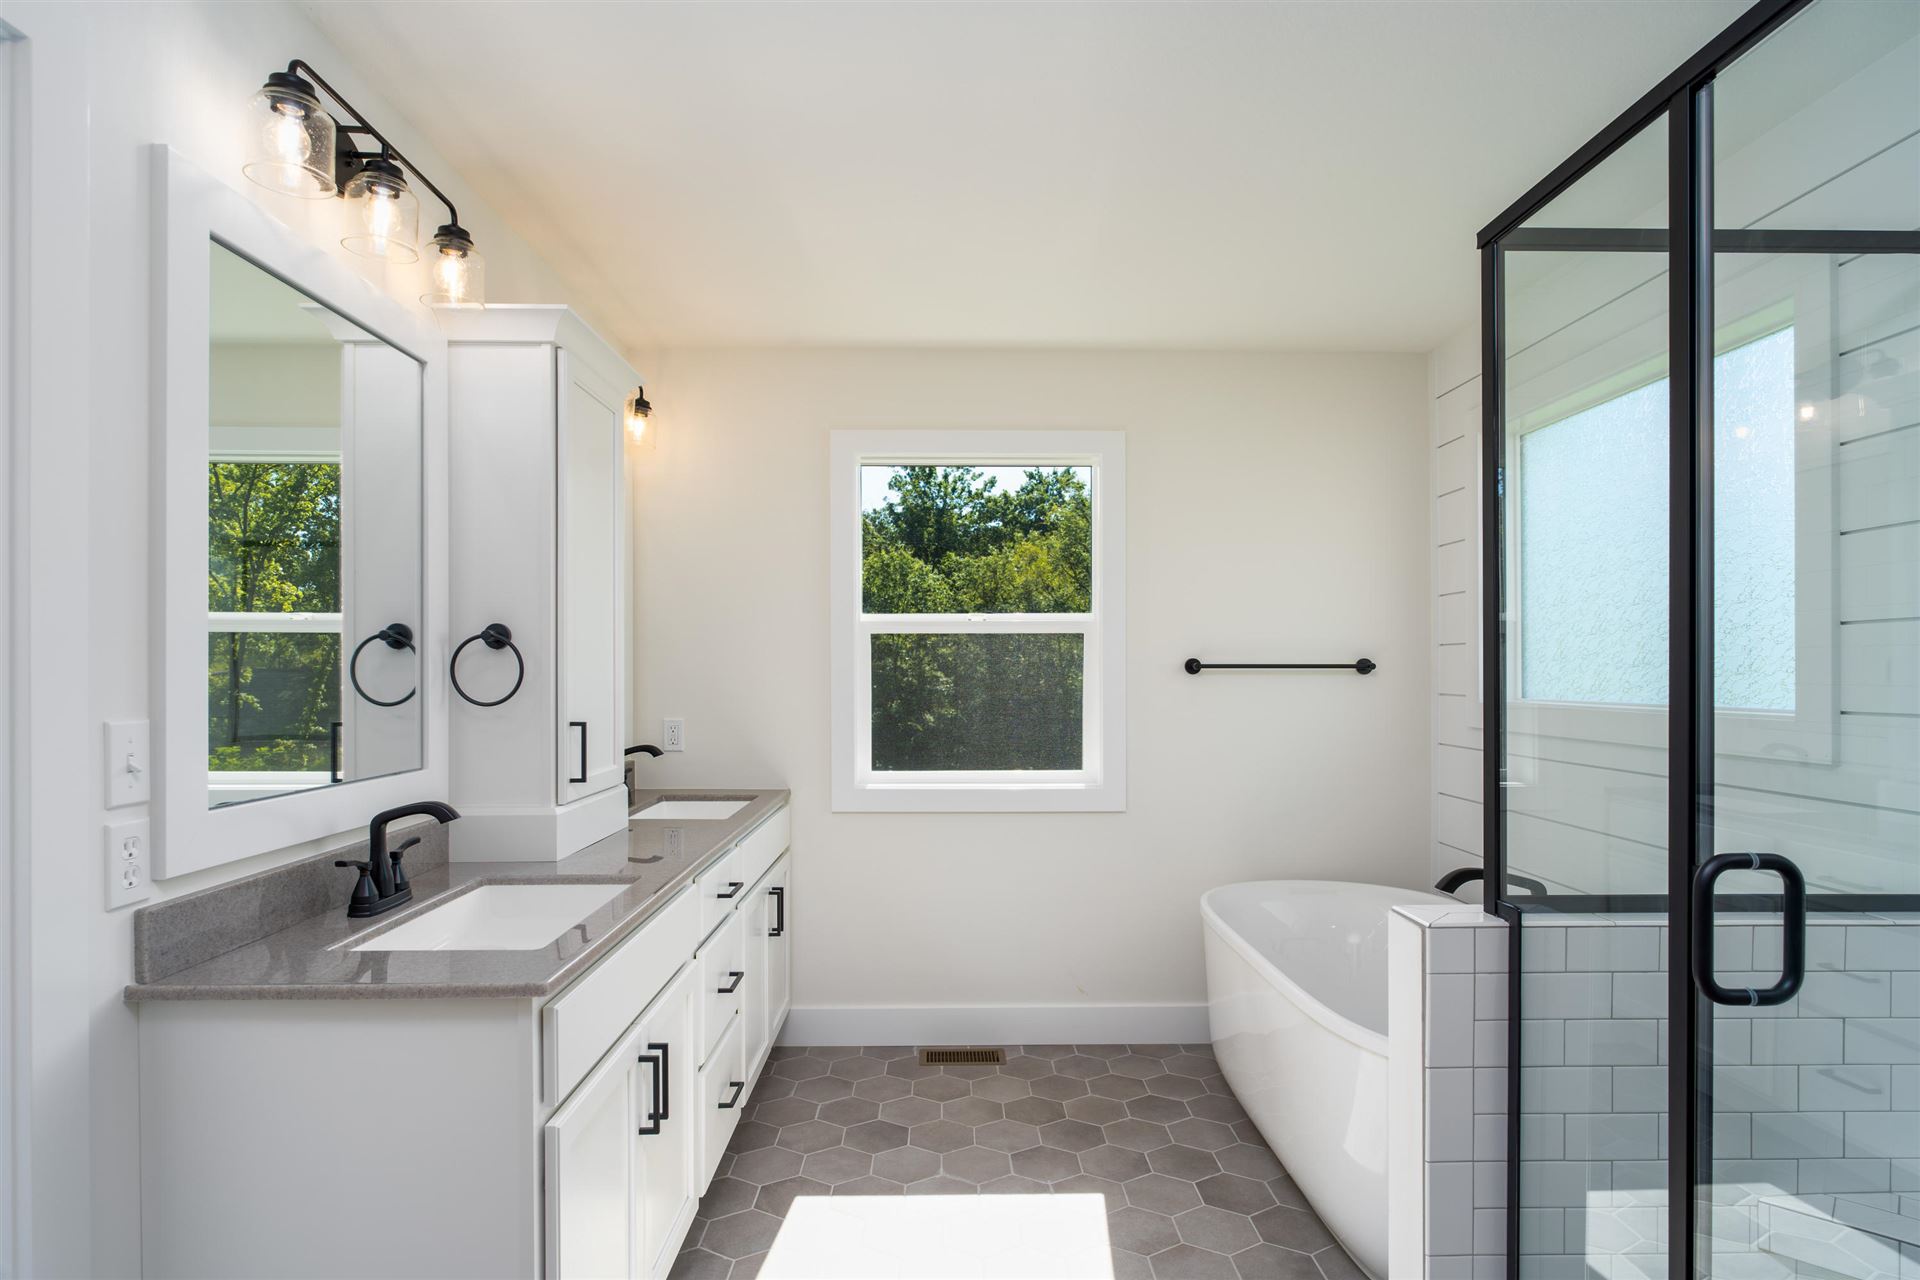 Enjoy a Luxurious Custom Bathroom Remodel From Hansman Custom Homes in Columbia, Missouri.